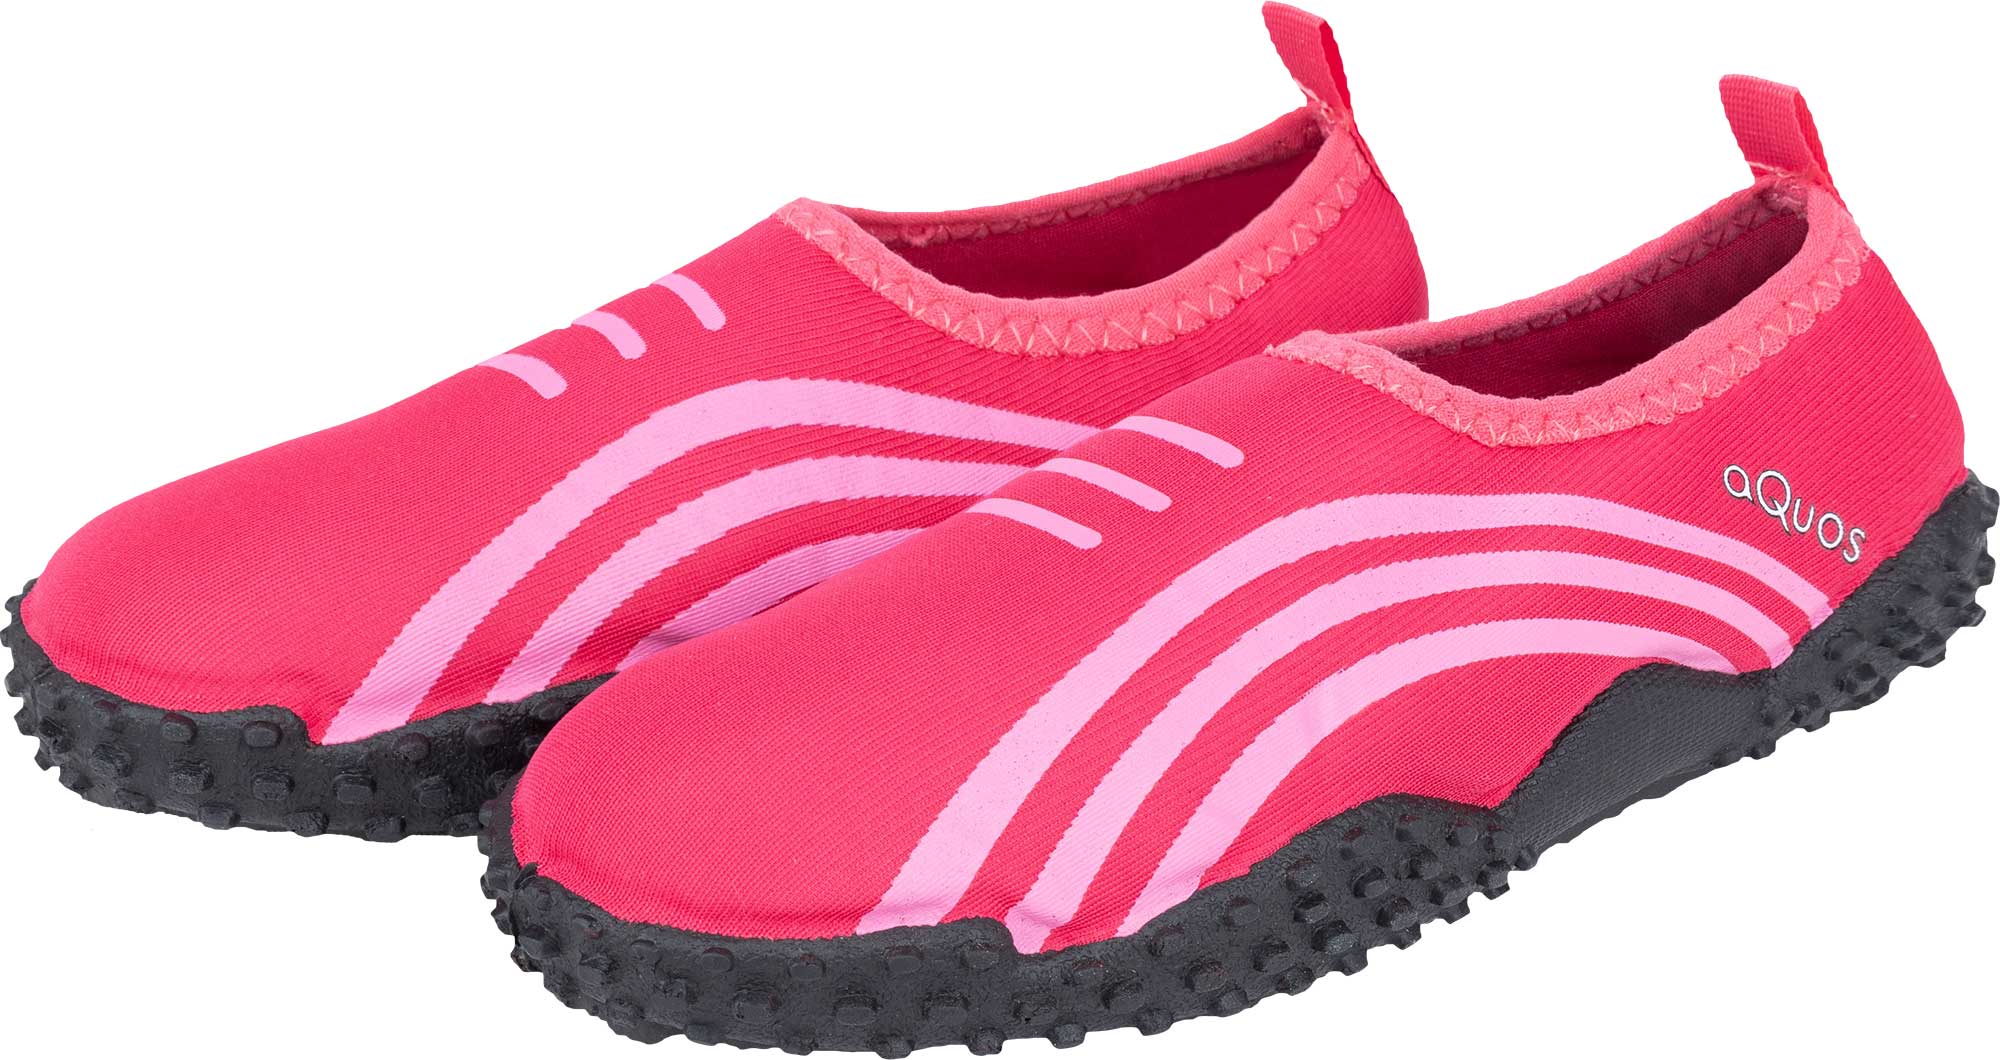 Children's water shoes